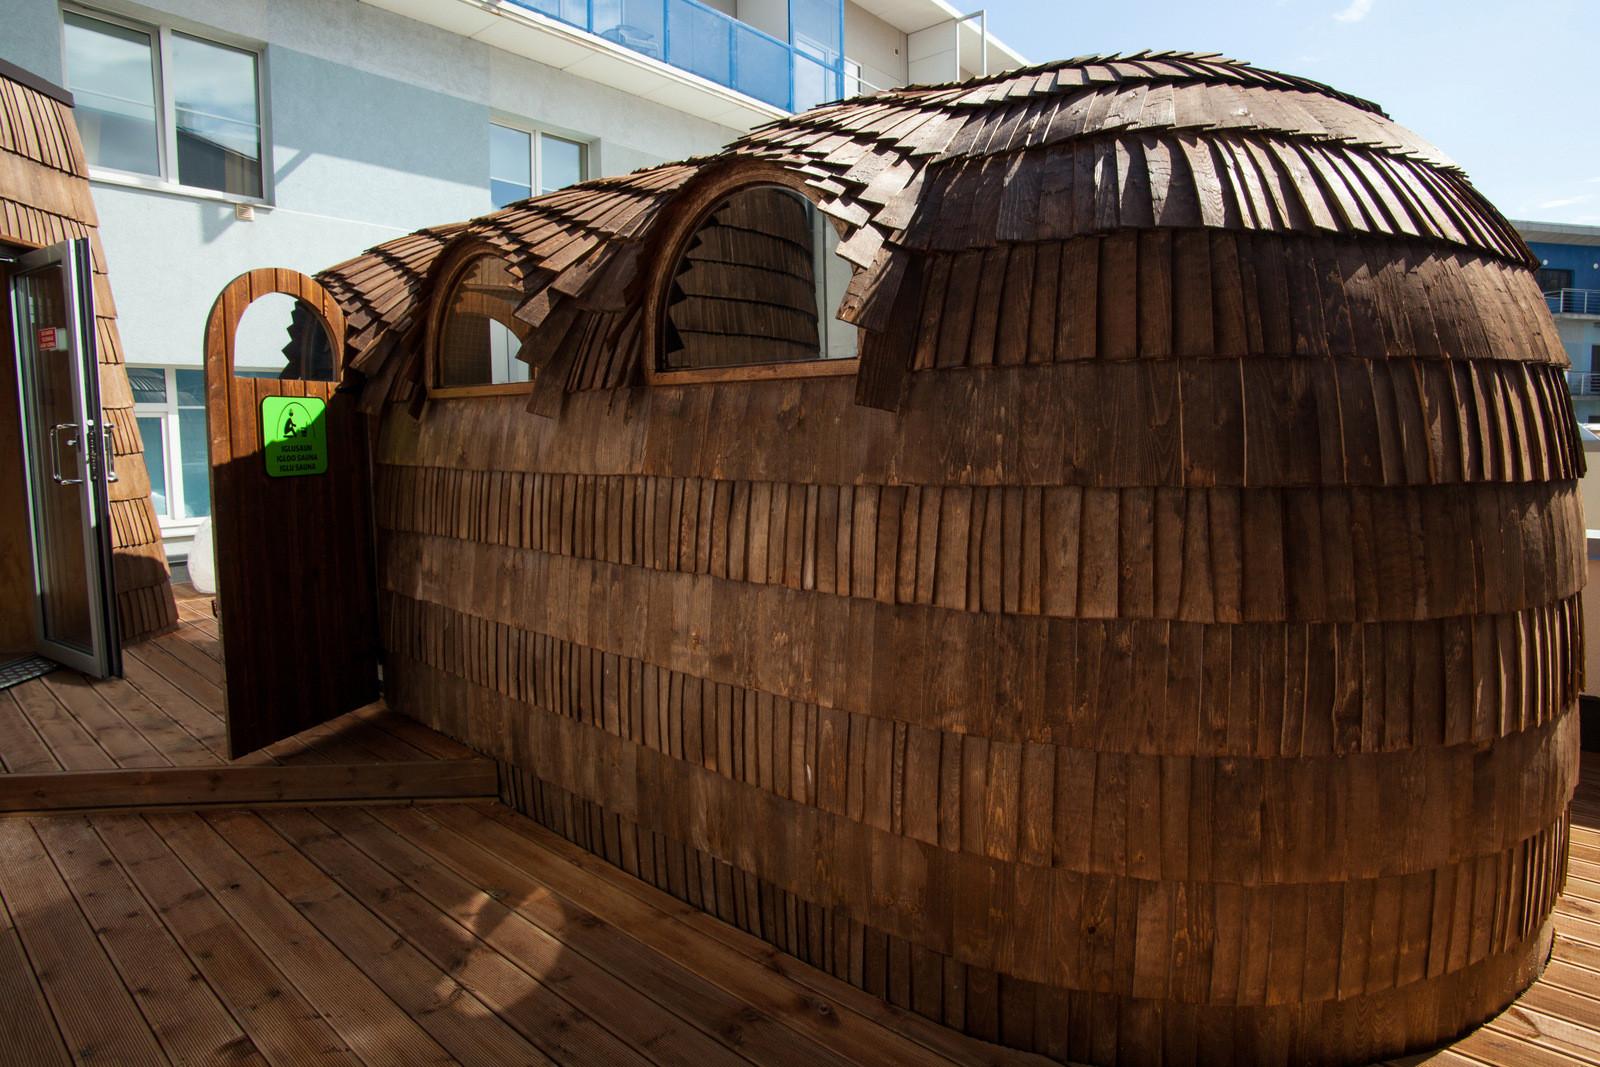 Viking teepee sauna, located outside on the roof